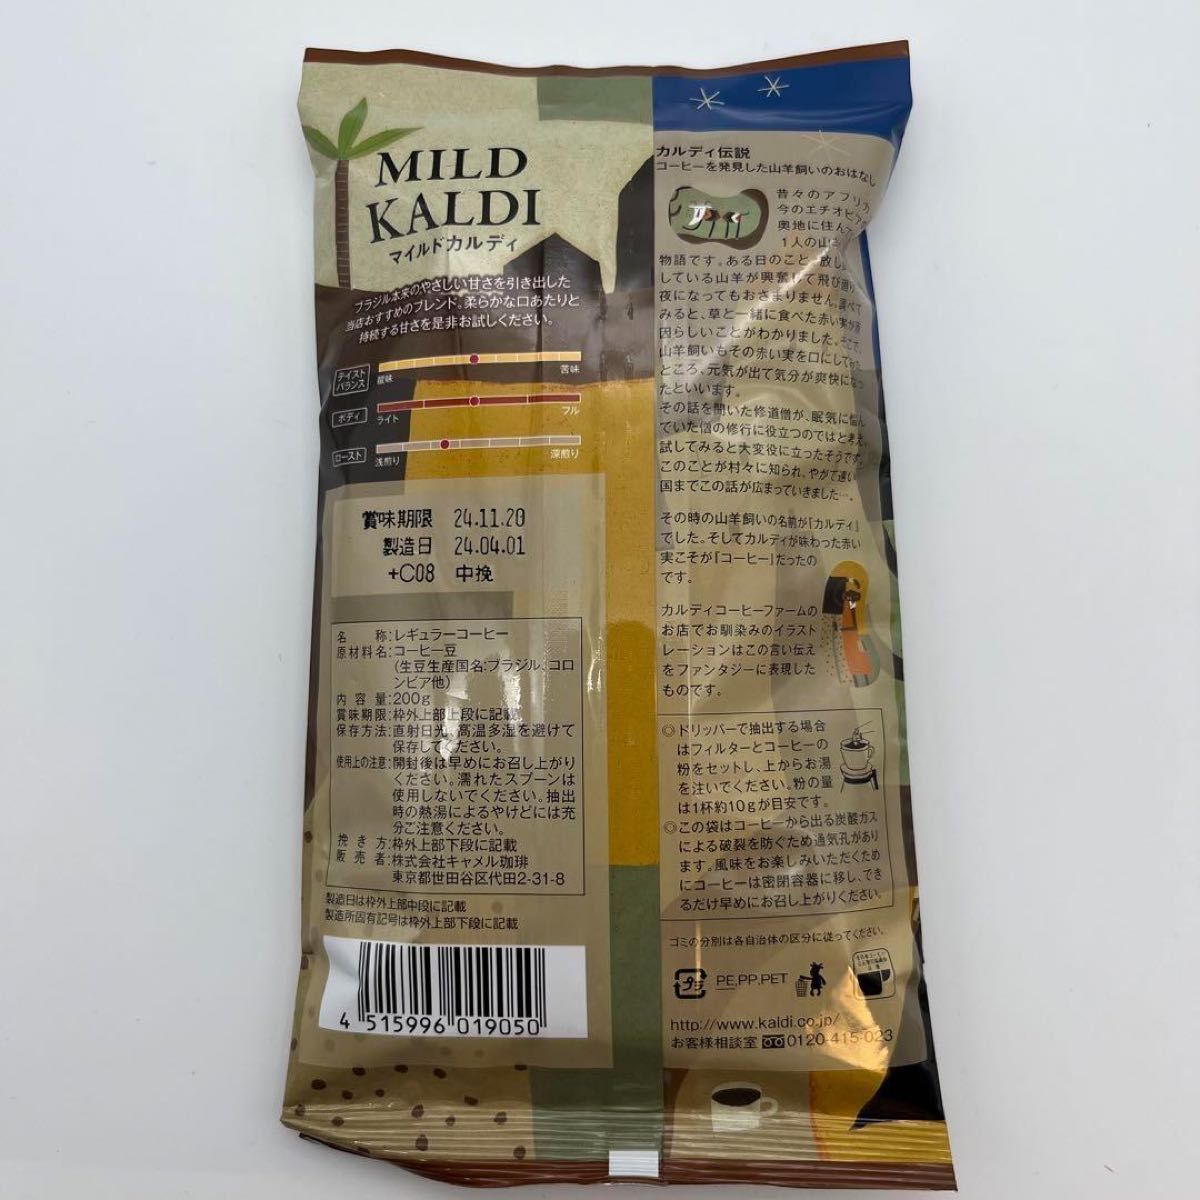 KALDI マイルドカルディ 中挽き コーヒー粉 200g × 2袋 カルディ